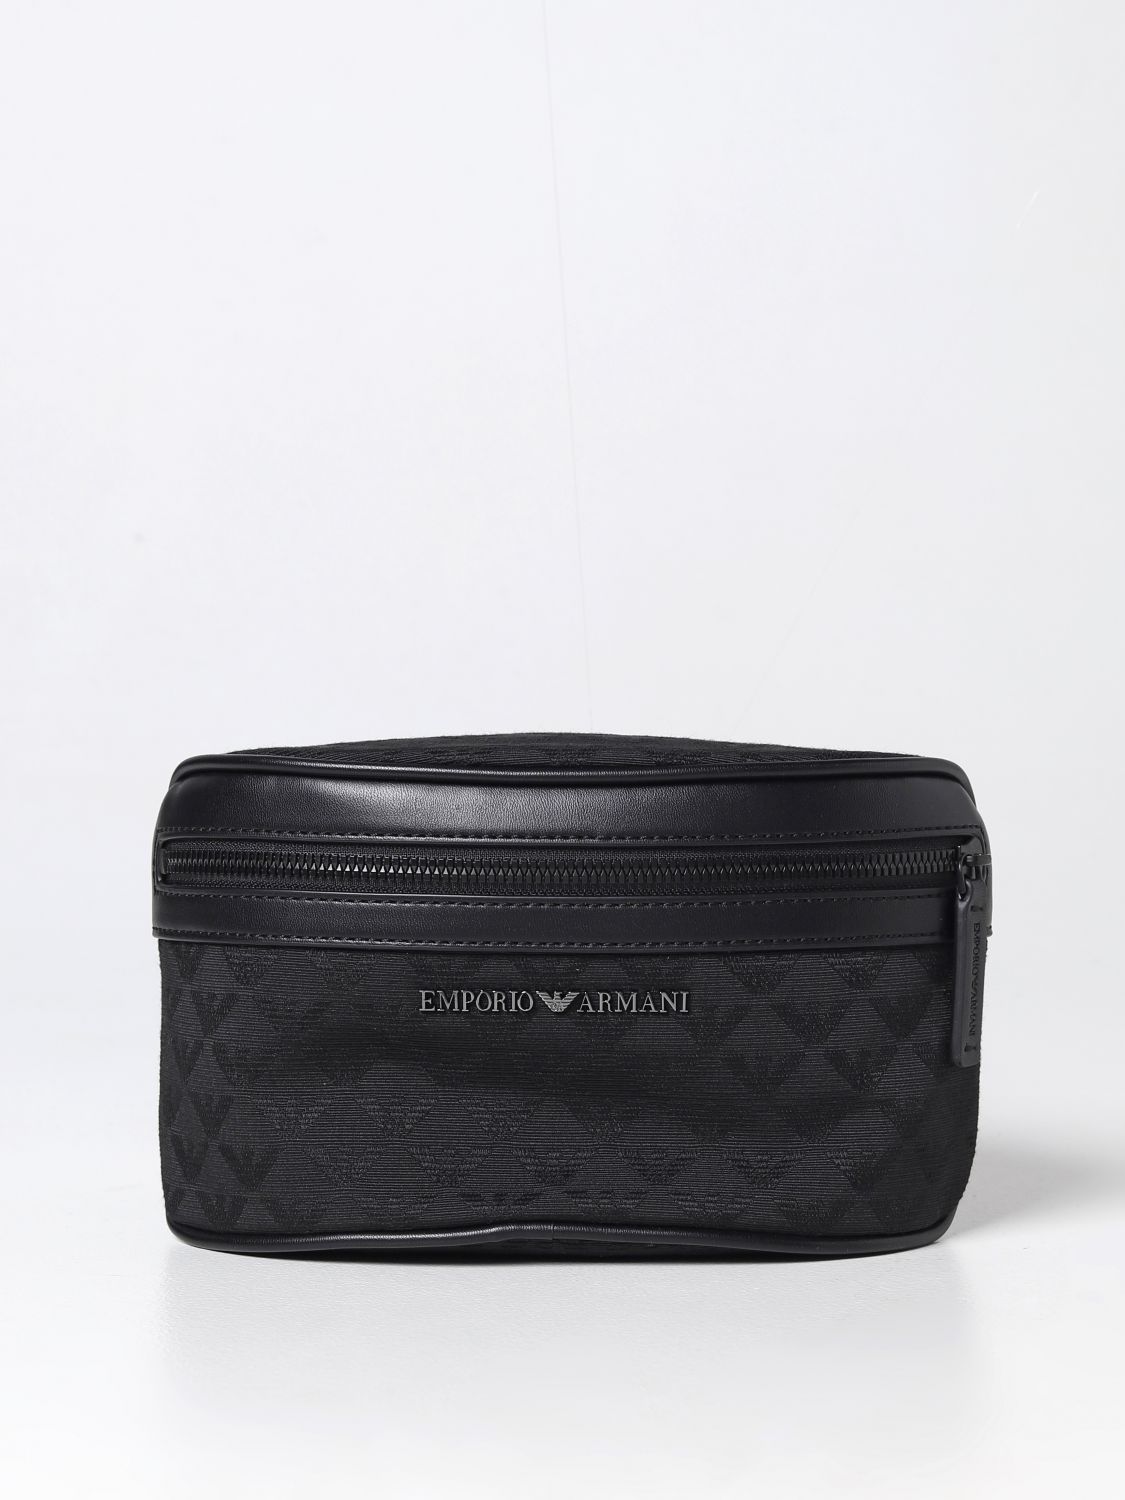 EMPORIO ARMANI: belt bag for man - Black | Emporio Armani belt bag ...